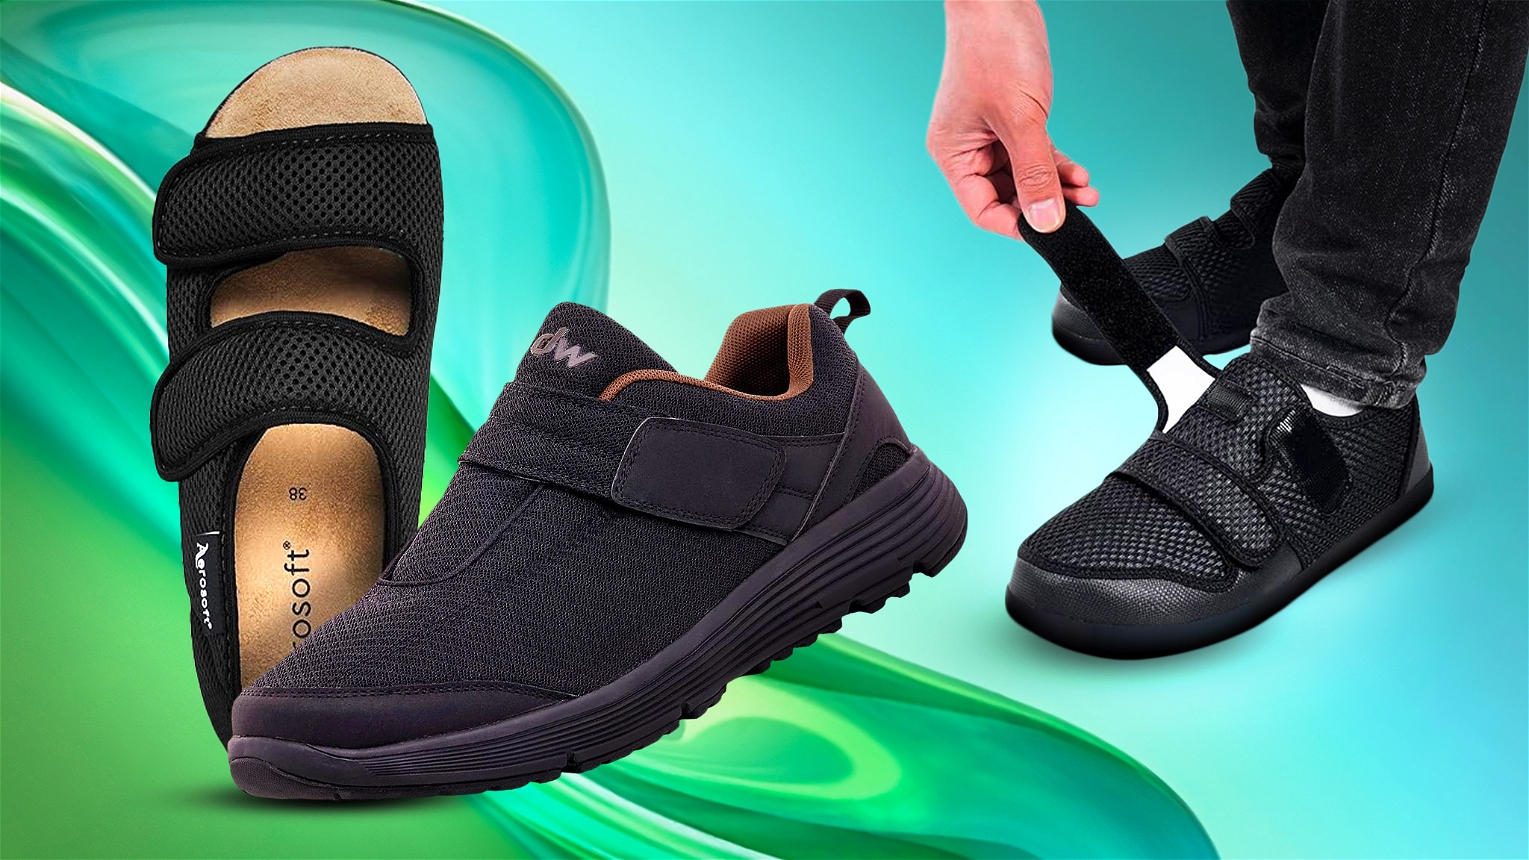 migliori scarpe per diabetici grafica verde acqua 